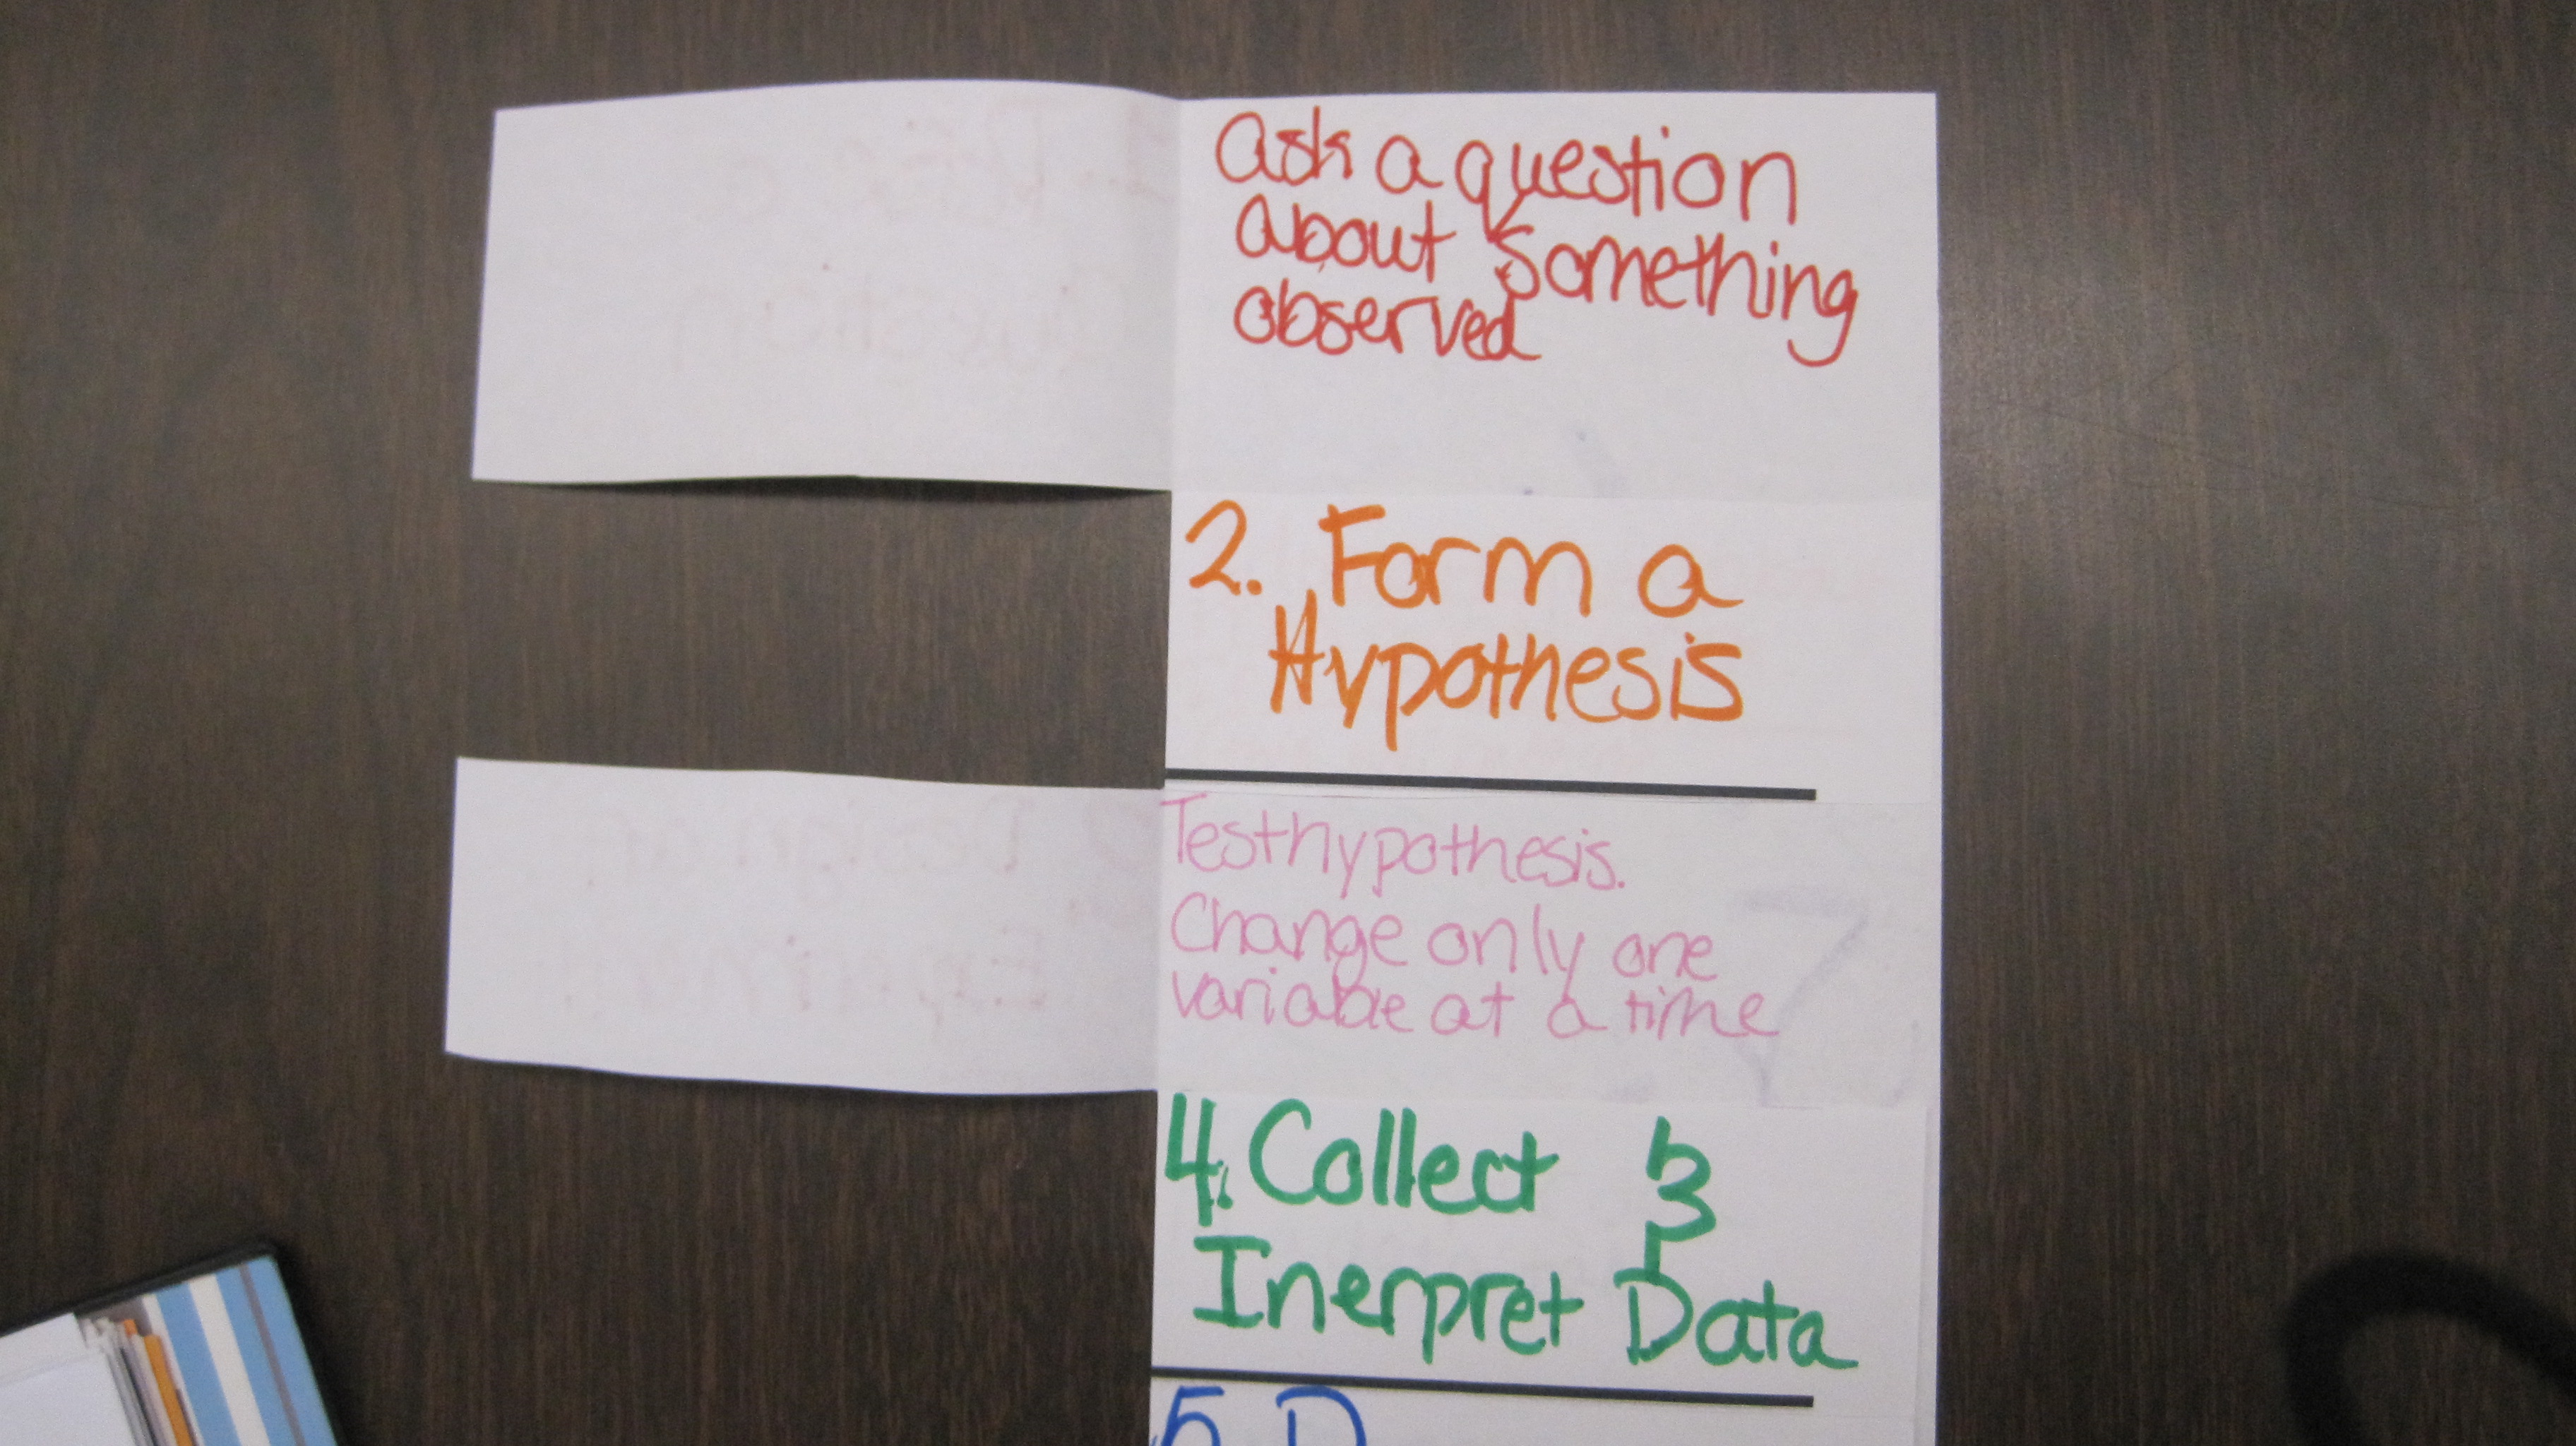 Scientific method essay questions middle school